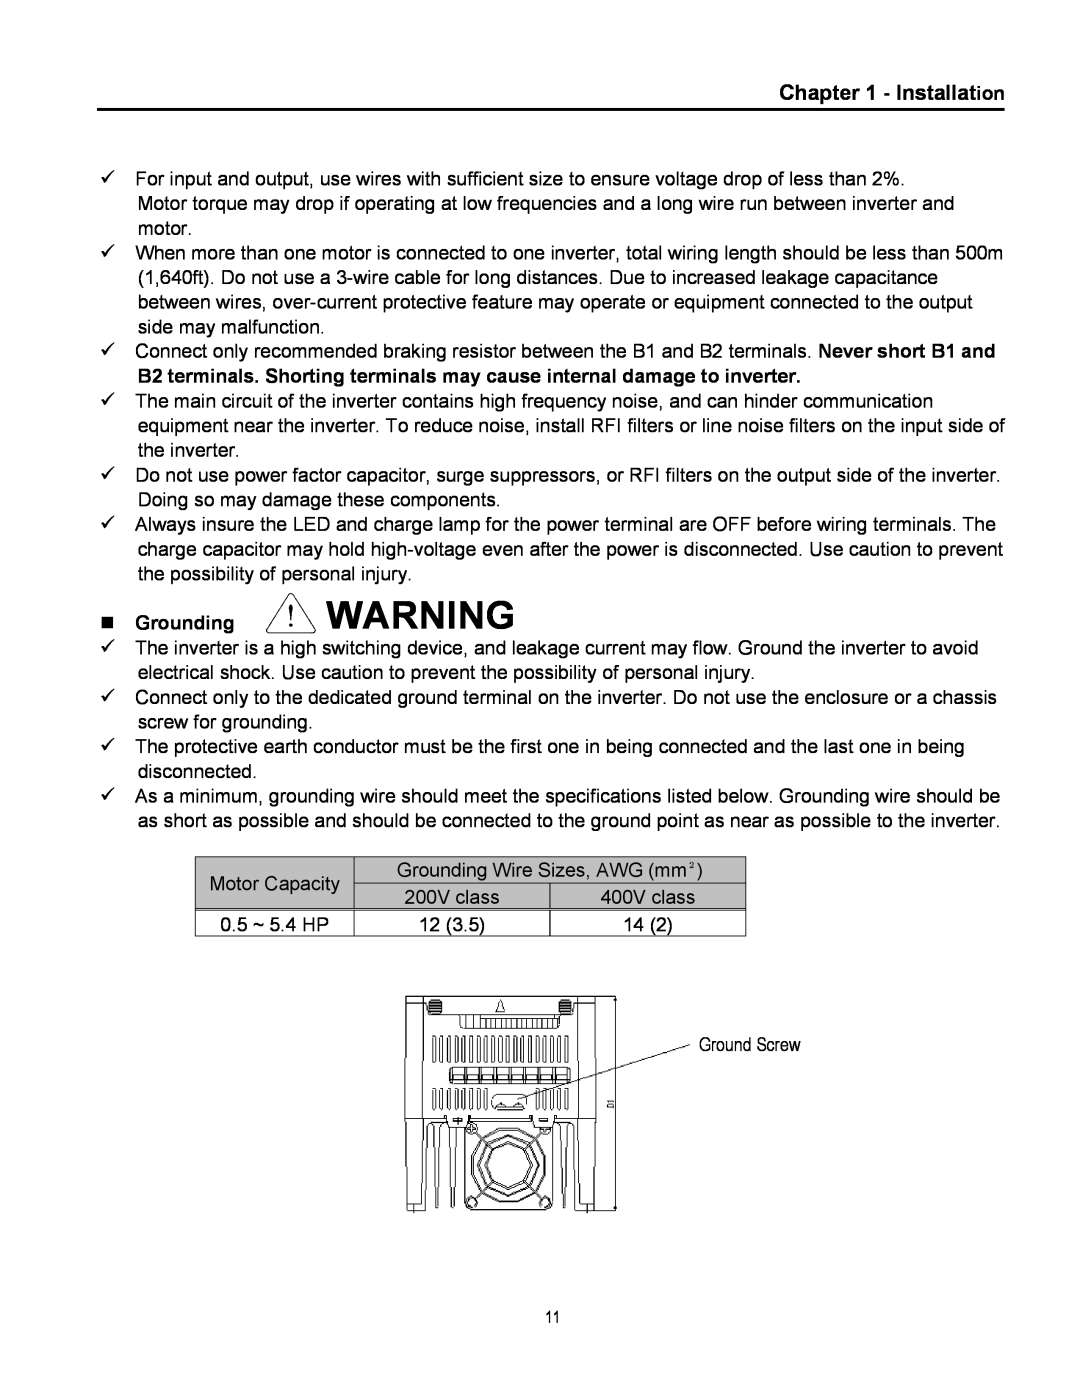 Cleveland Range inverter manual Installation, Grounding WARNING 